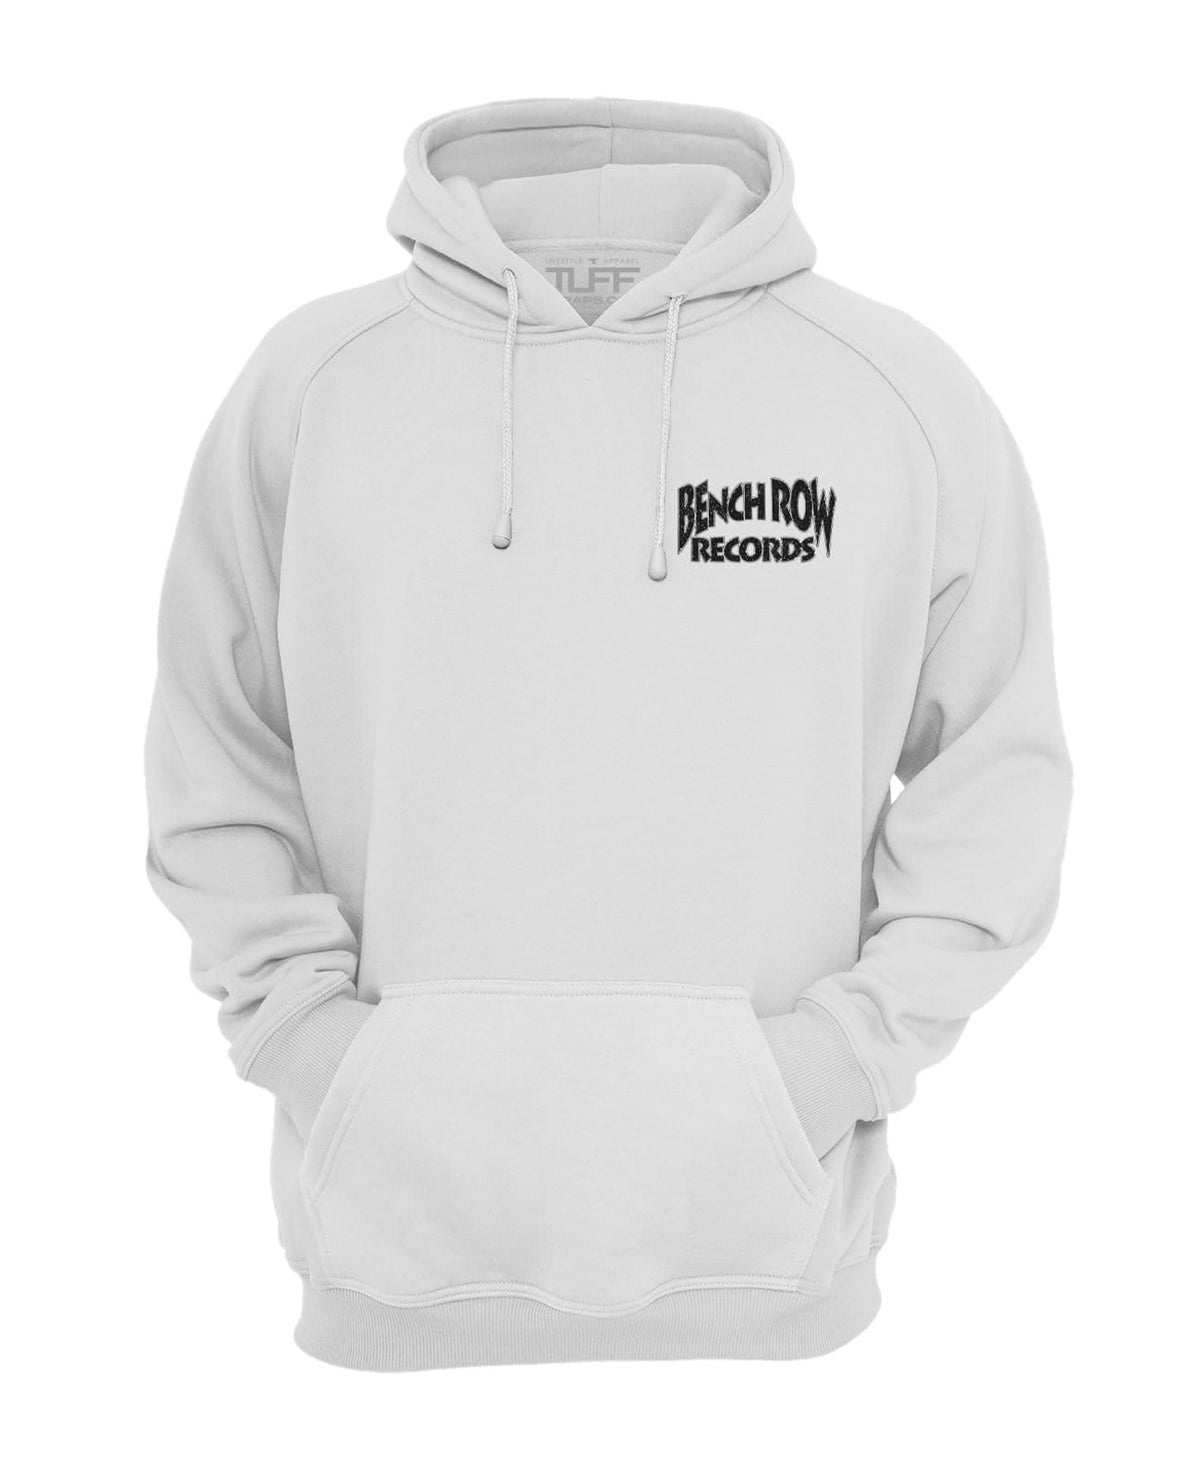 Bench Row Records Hooded Sweatshirt TuffWraps.com